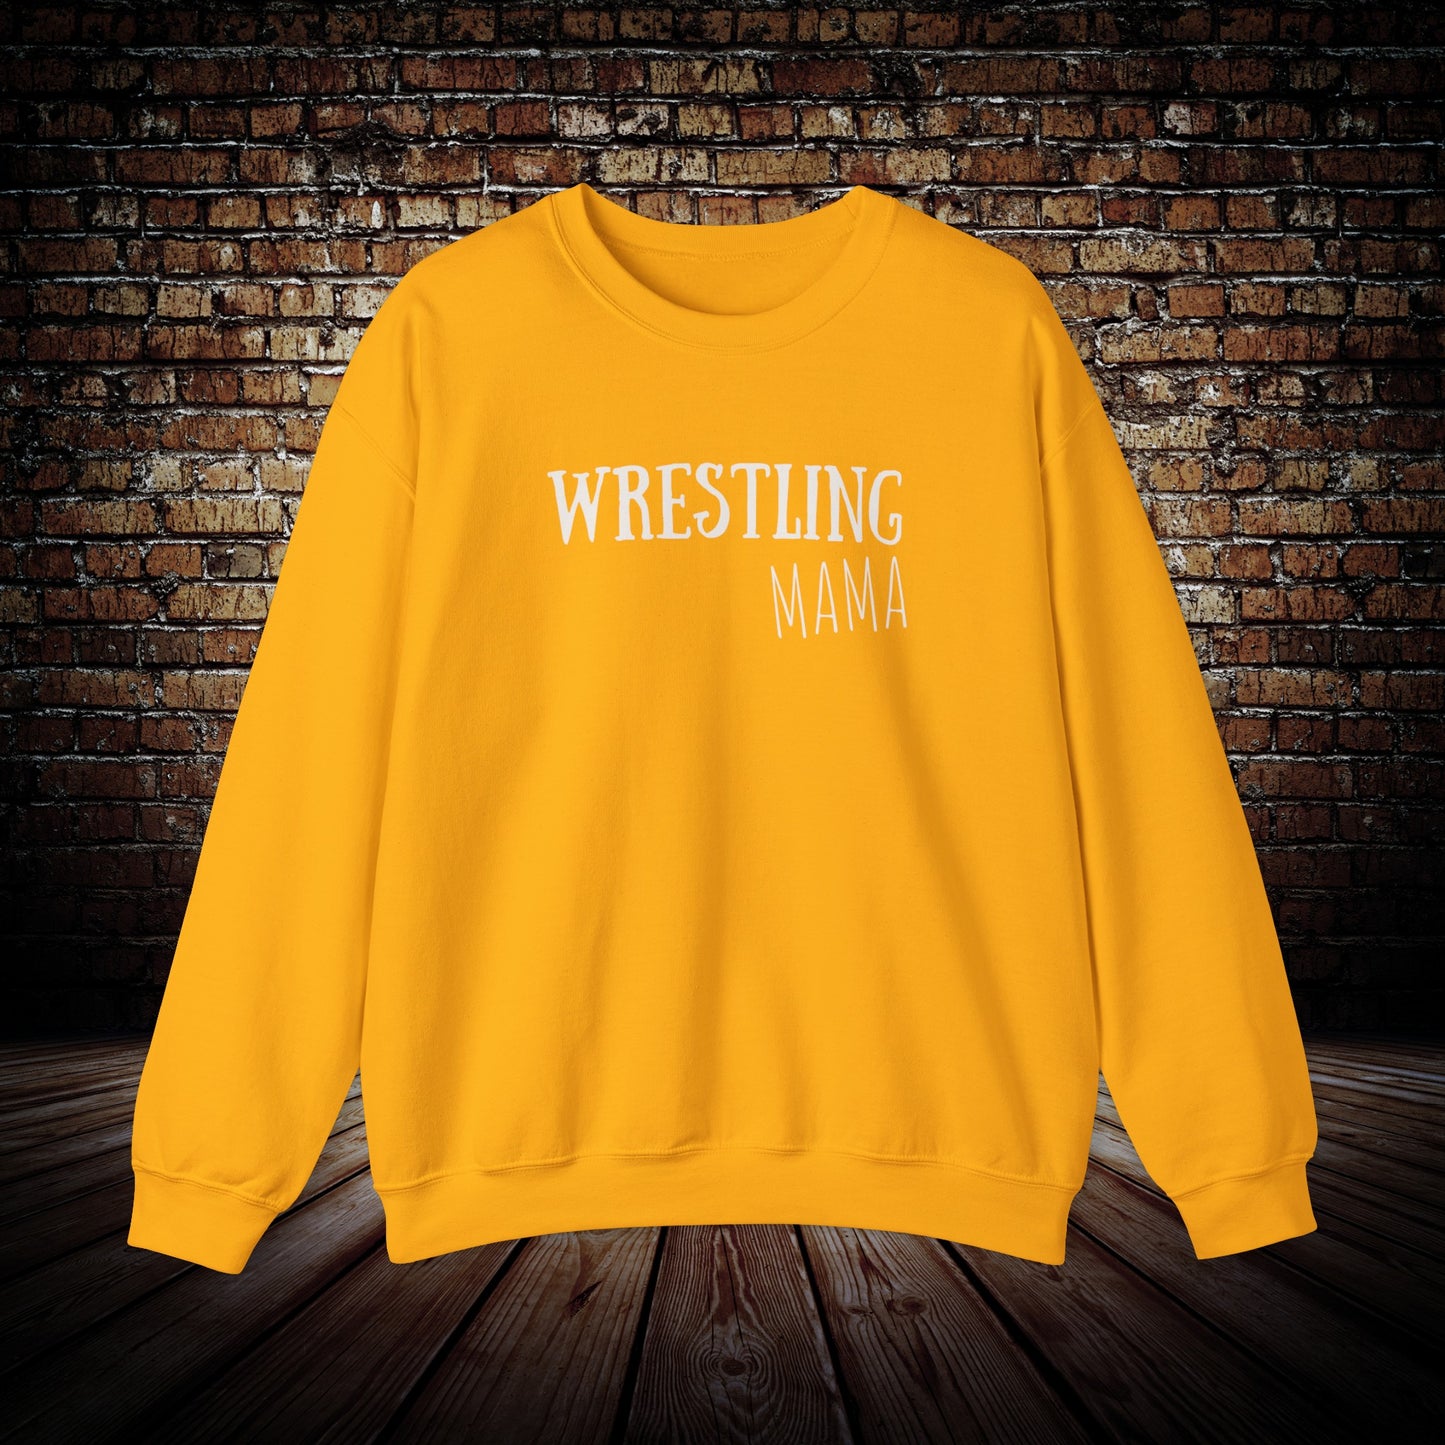 Wrestling mama sweatshirt